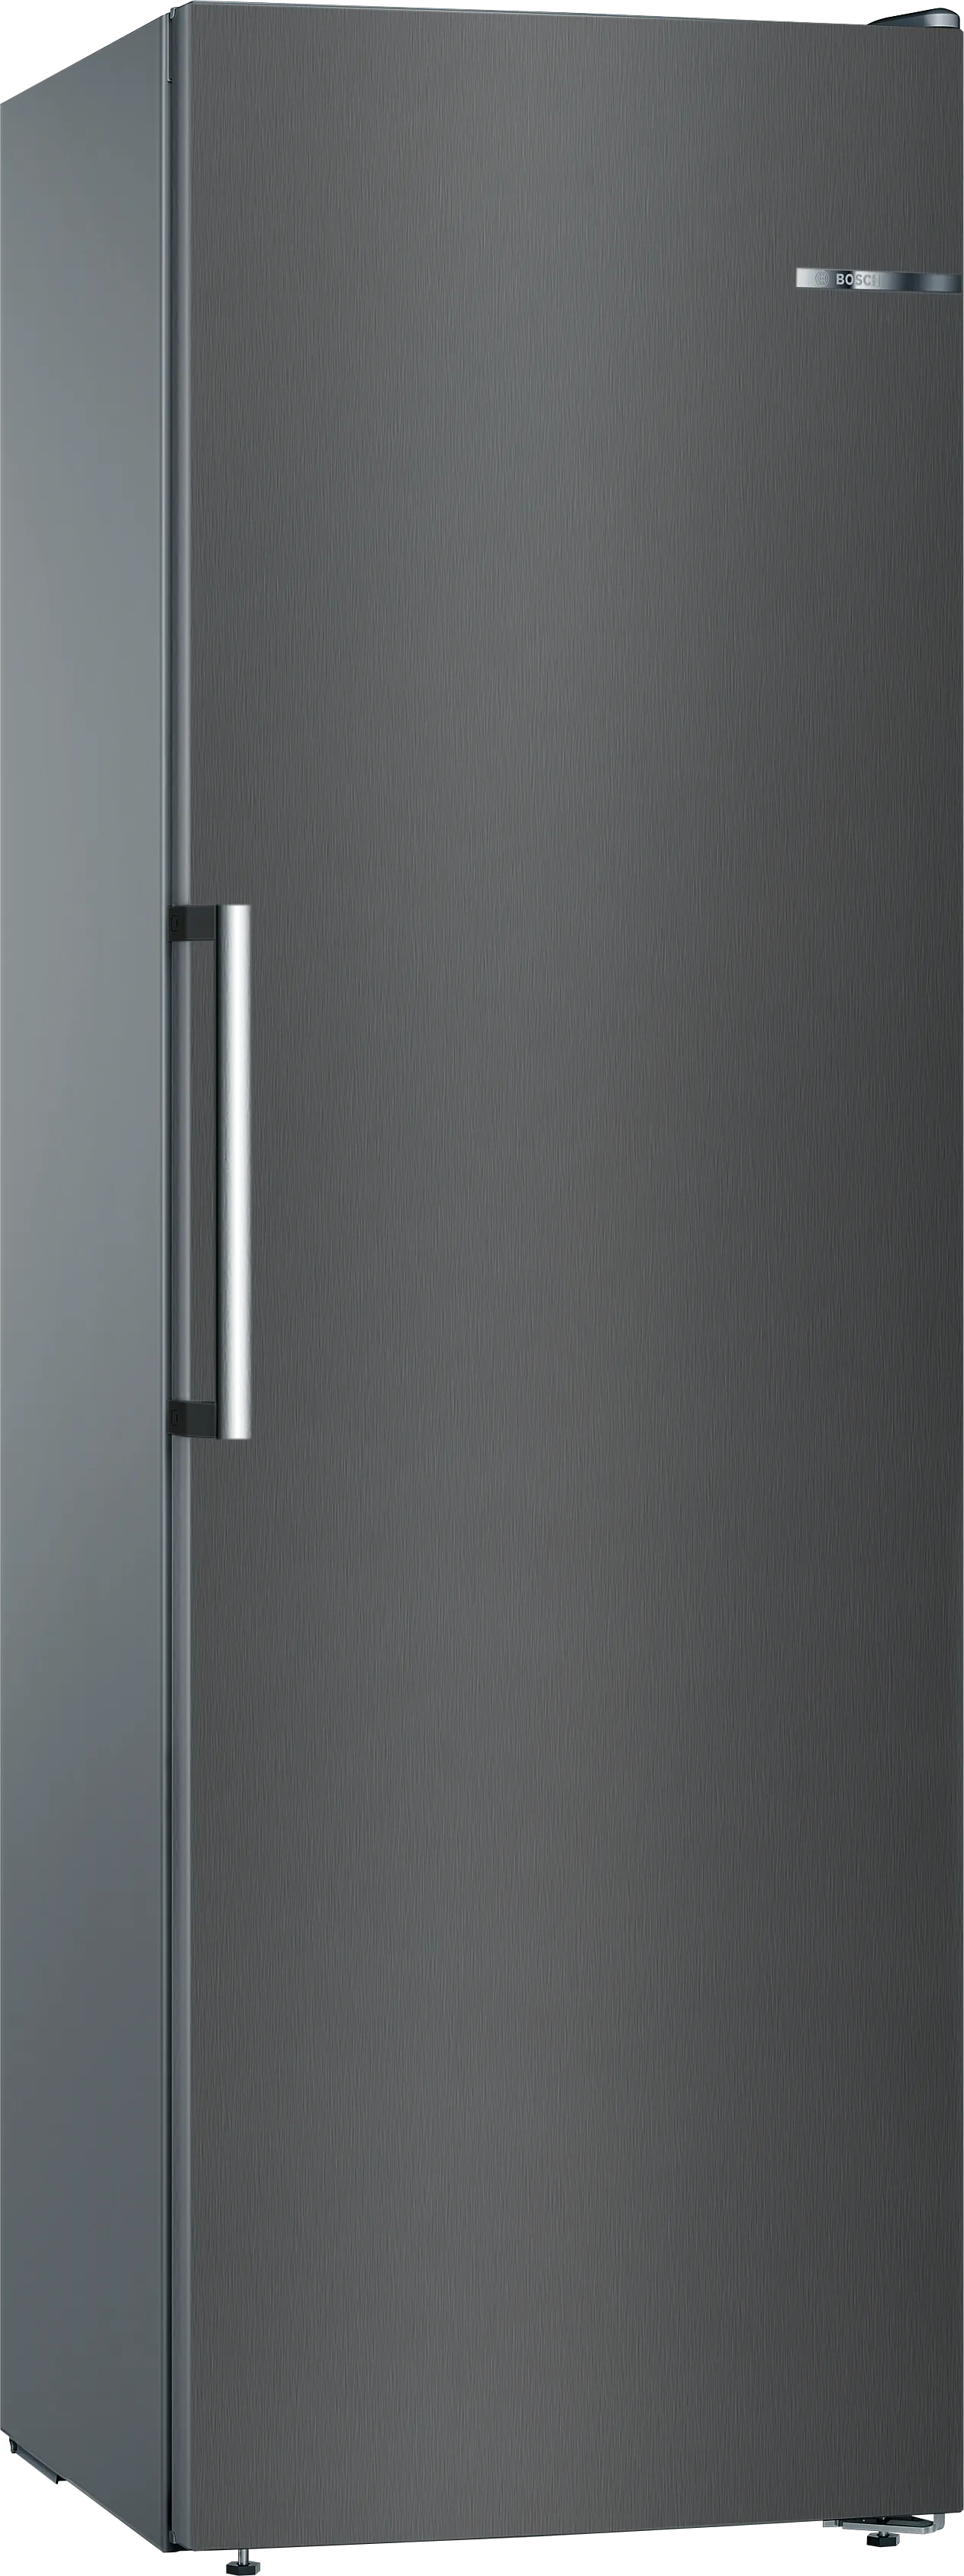 Series 4 free-standing freezer 186 x 60 cm Black stainless steel 